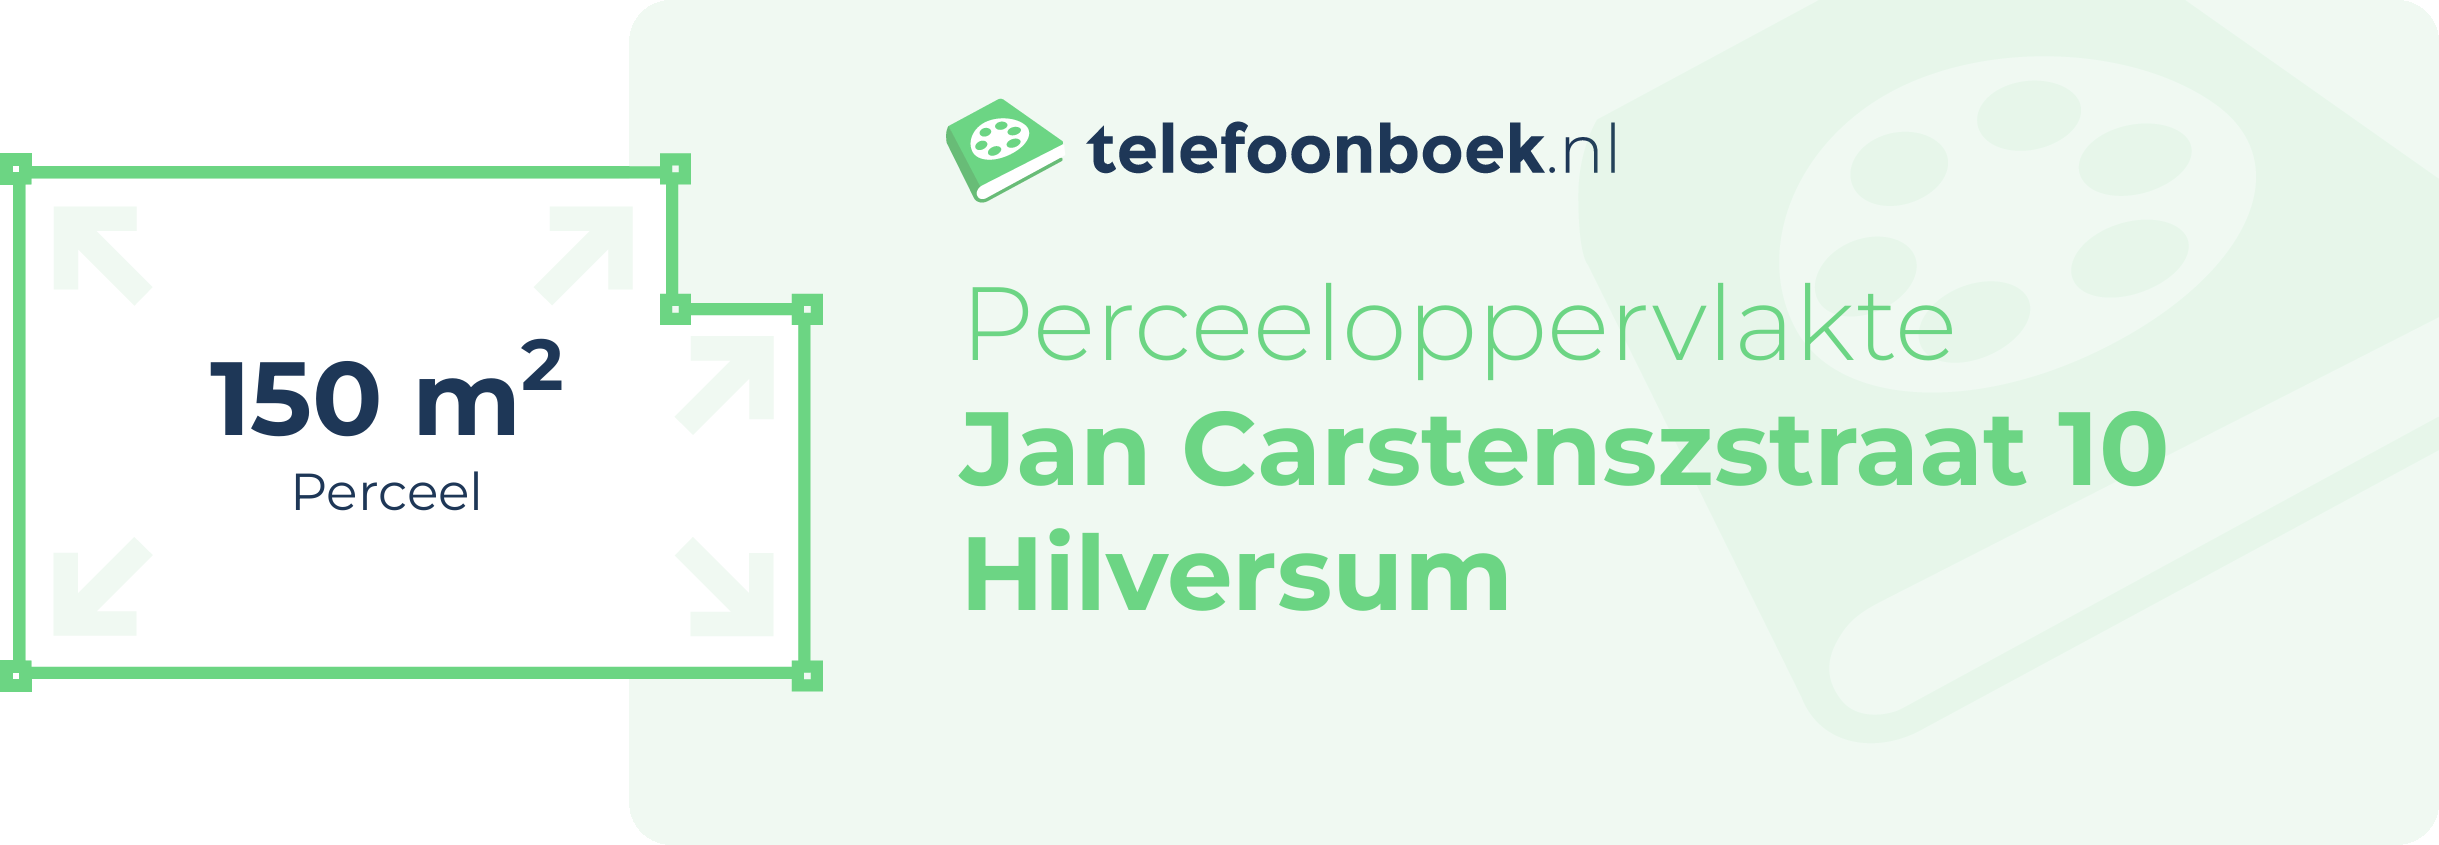 Perceeloppervlakte Jan Carstenszstraat 10 Hilversum